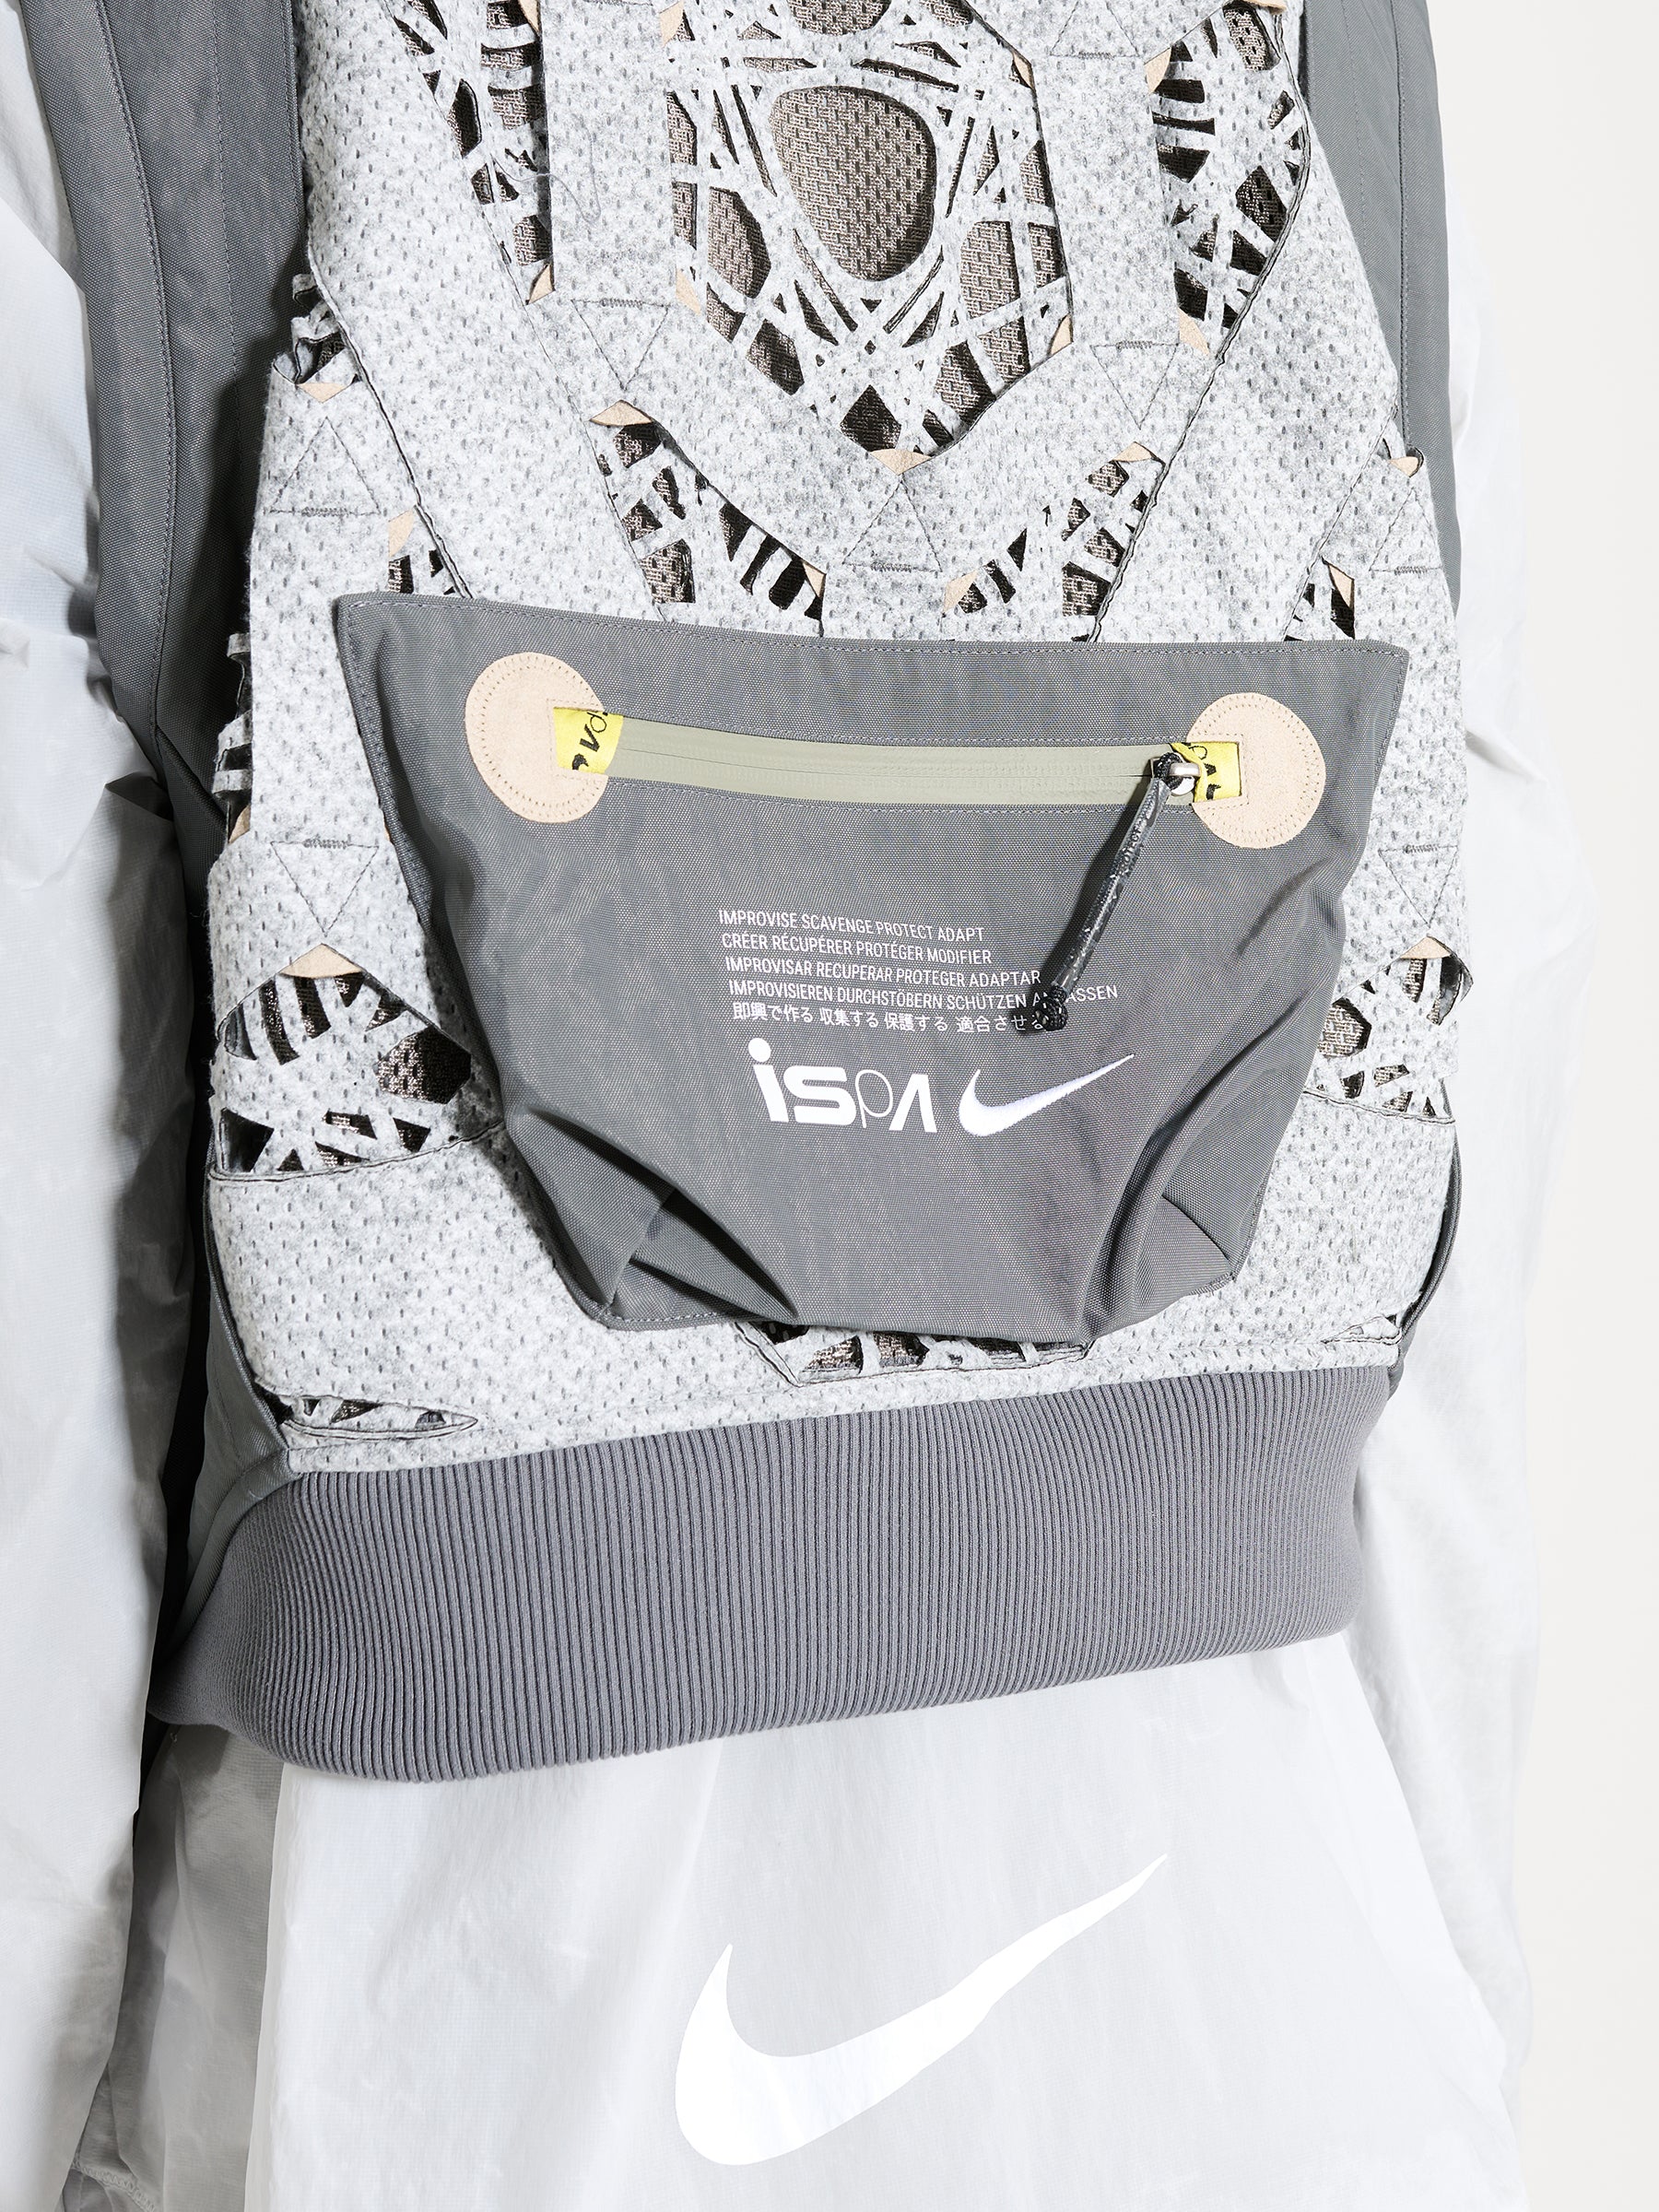 Nike ISPA U Nrg Metamorph Jacket Photon Dust / Iron Grey